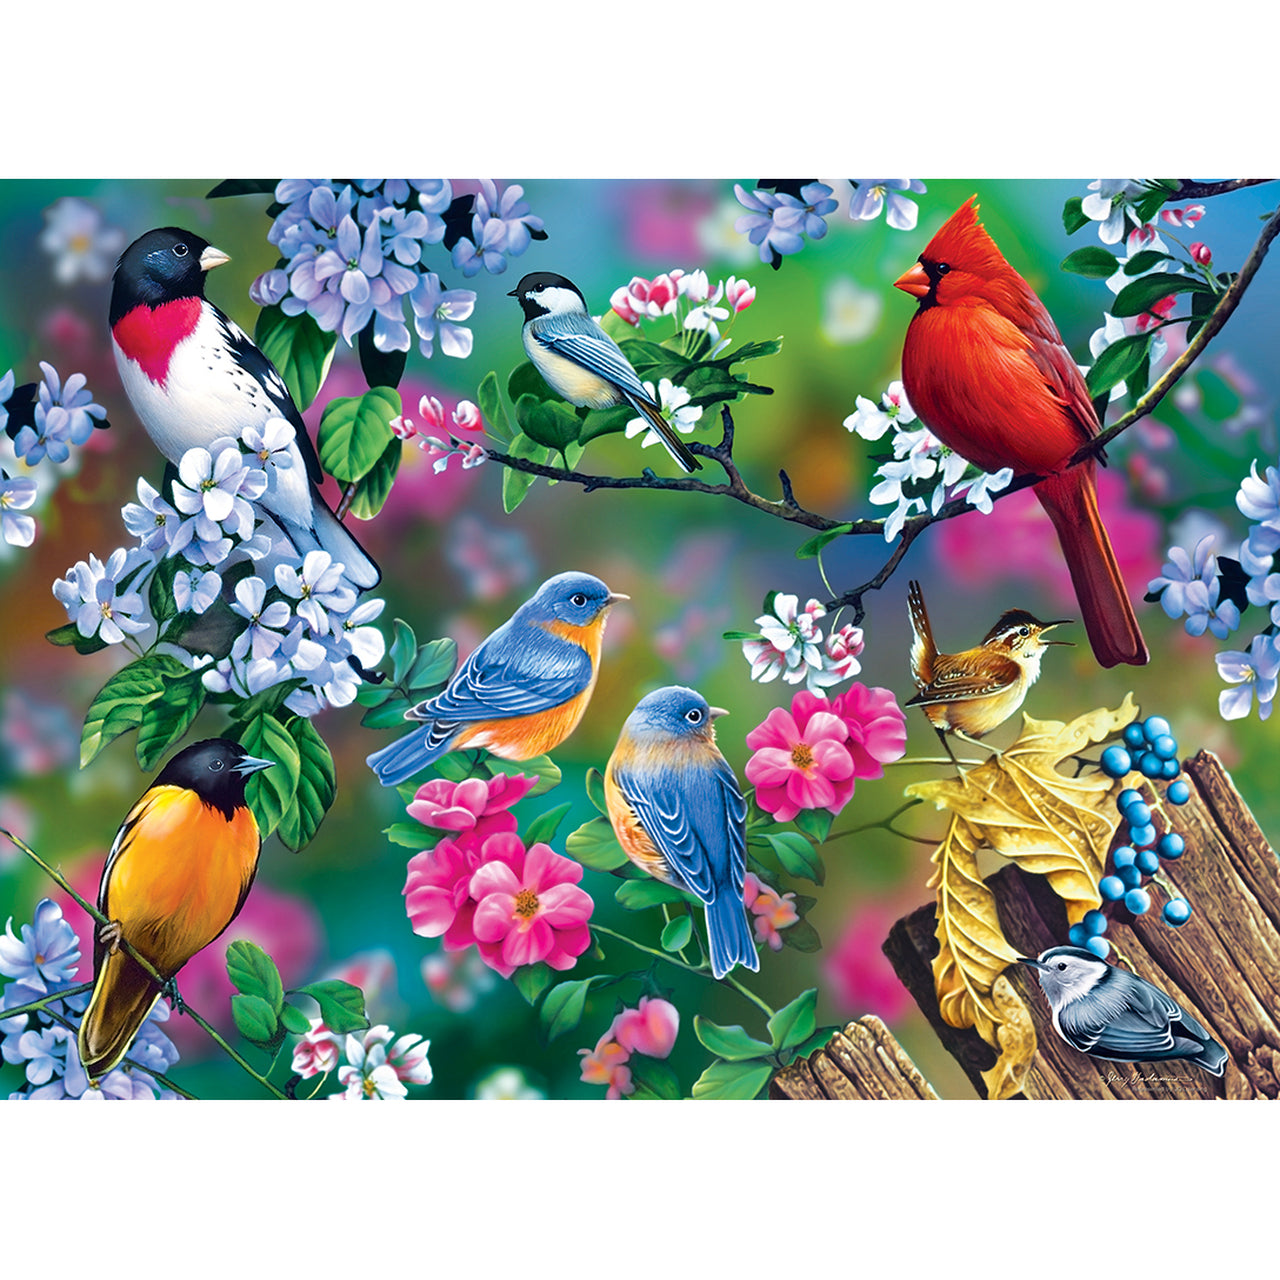 Audubon - Songbird Collage 1000 Piece Jigsaw Puzzle by MasterPieces